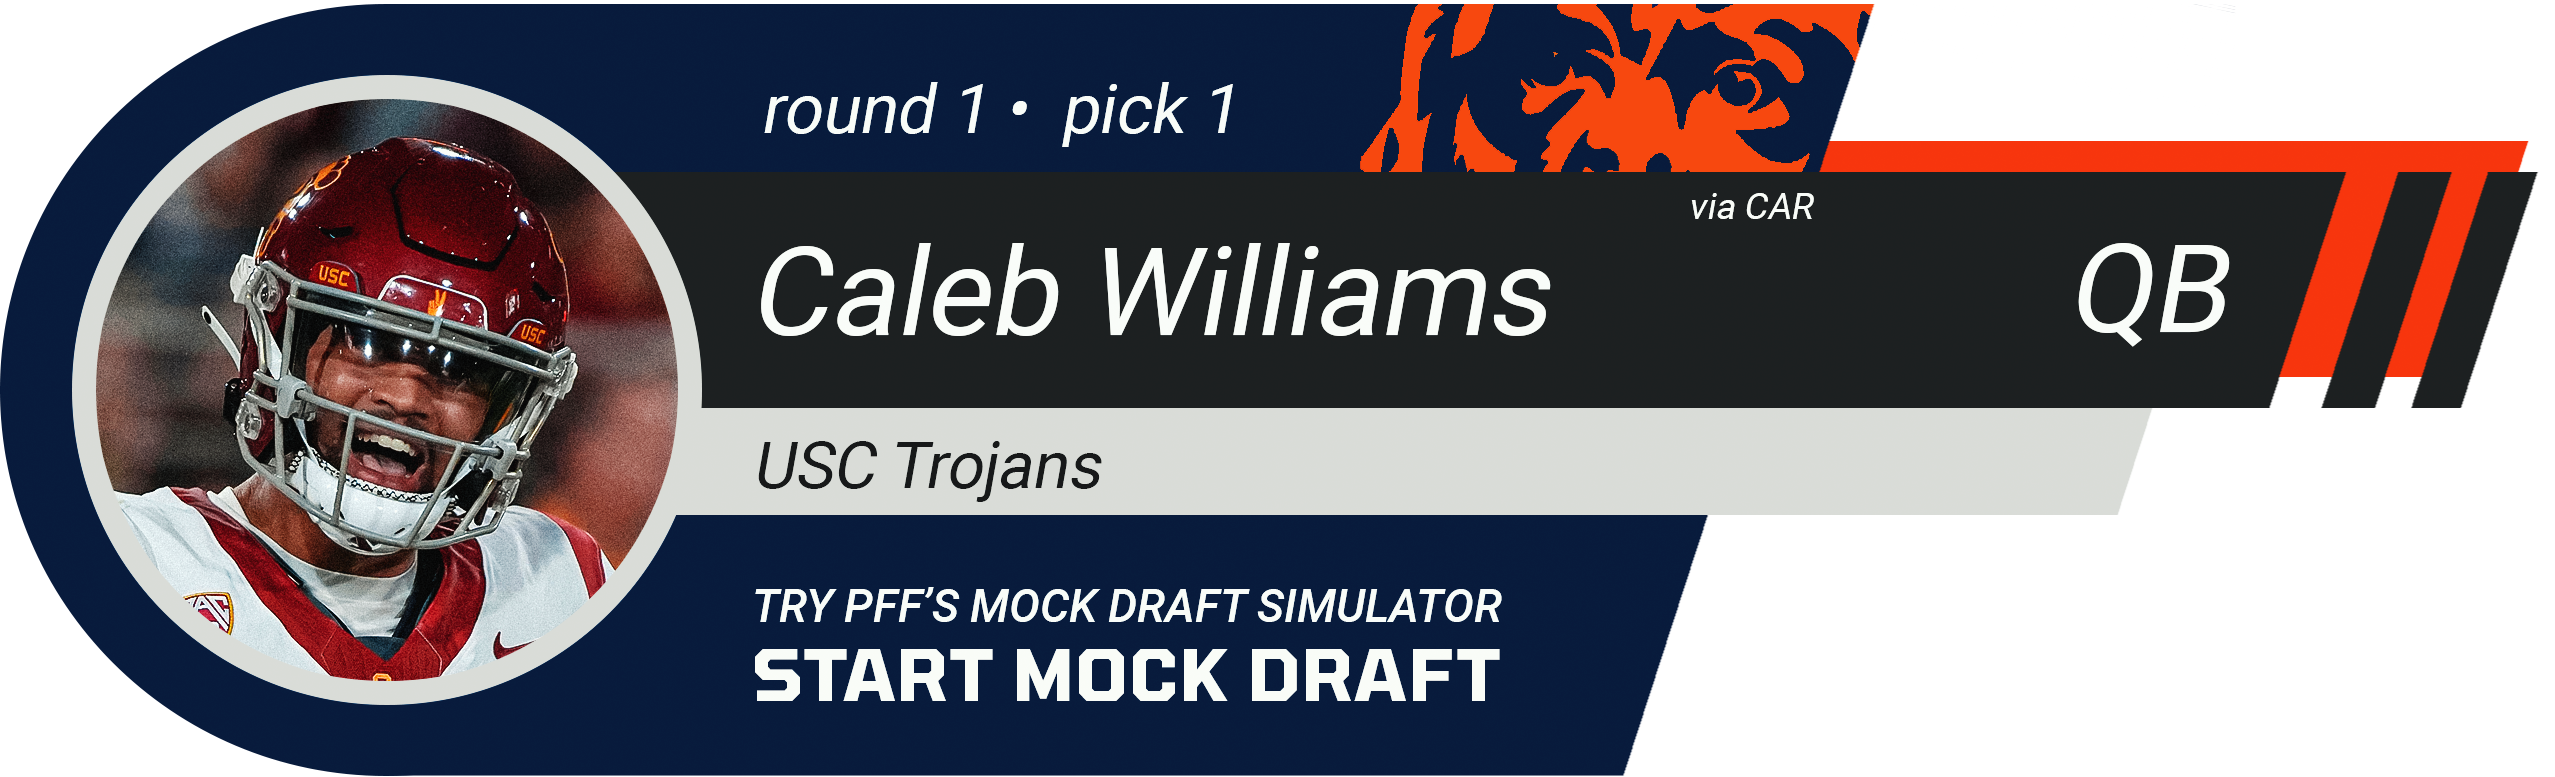 1. Chicago Bears: QB Caleb Williams, USC